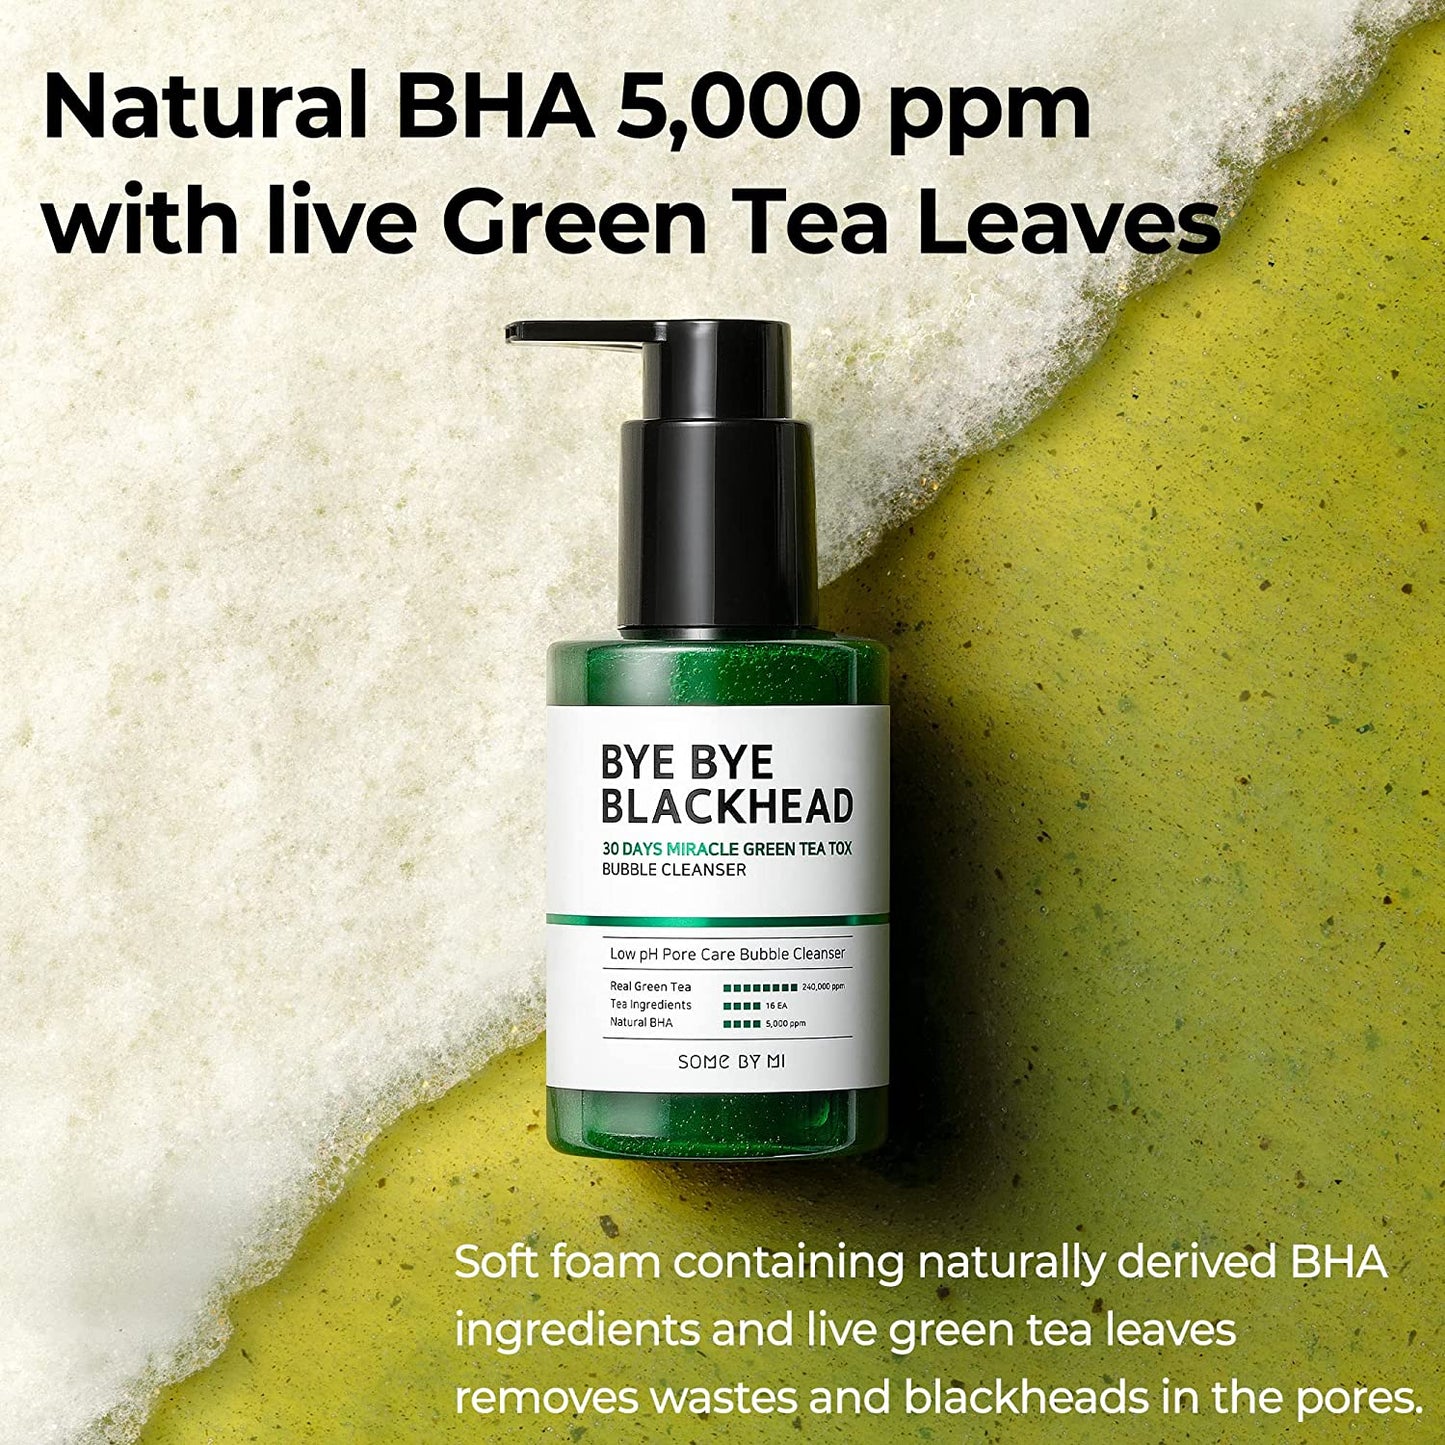 SOME BY MI Bye Bye Blackhead 30 Days Miracle Green Tea Tox Bubble Cleanser / 4.23 Oz, 120g